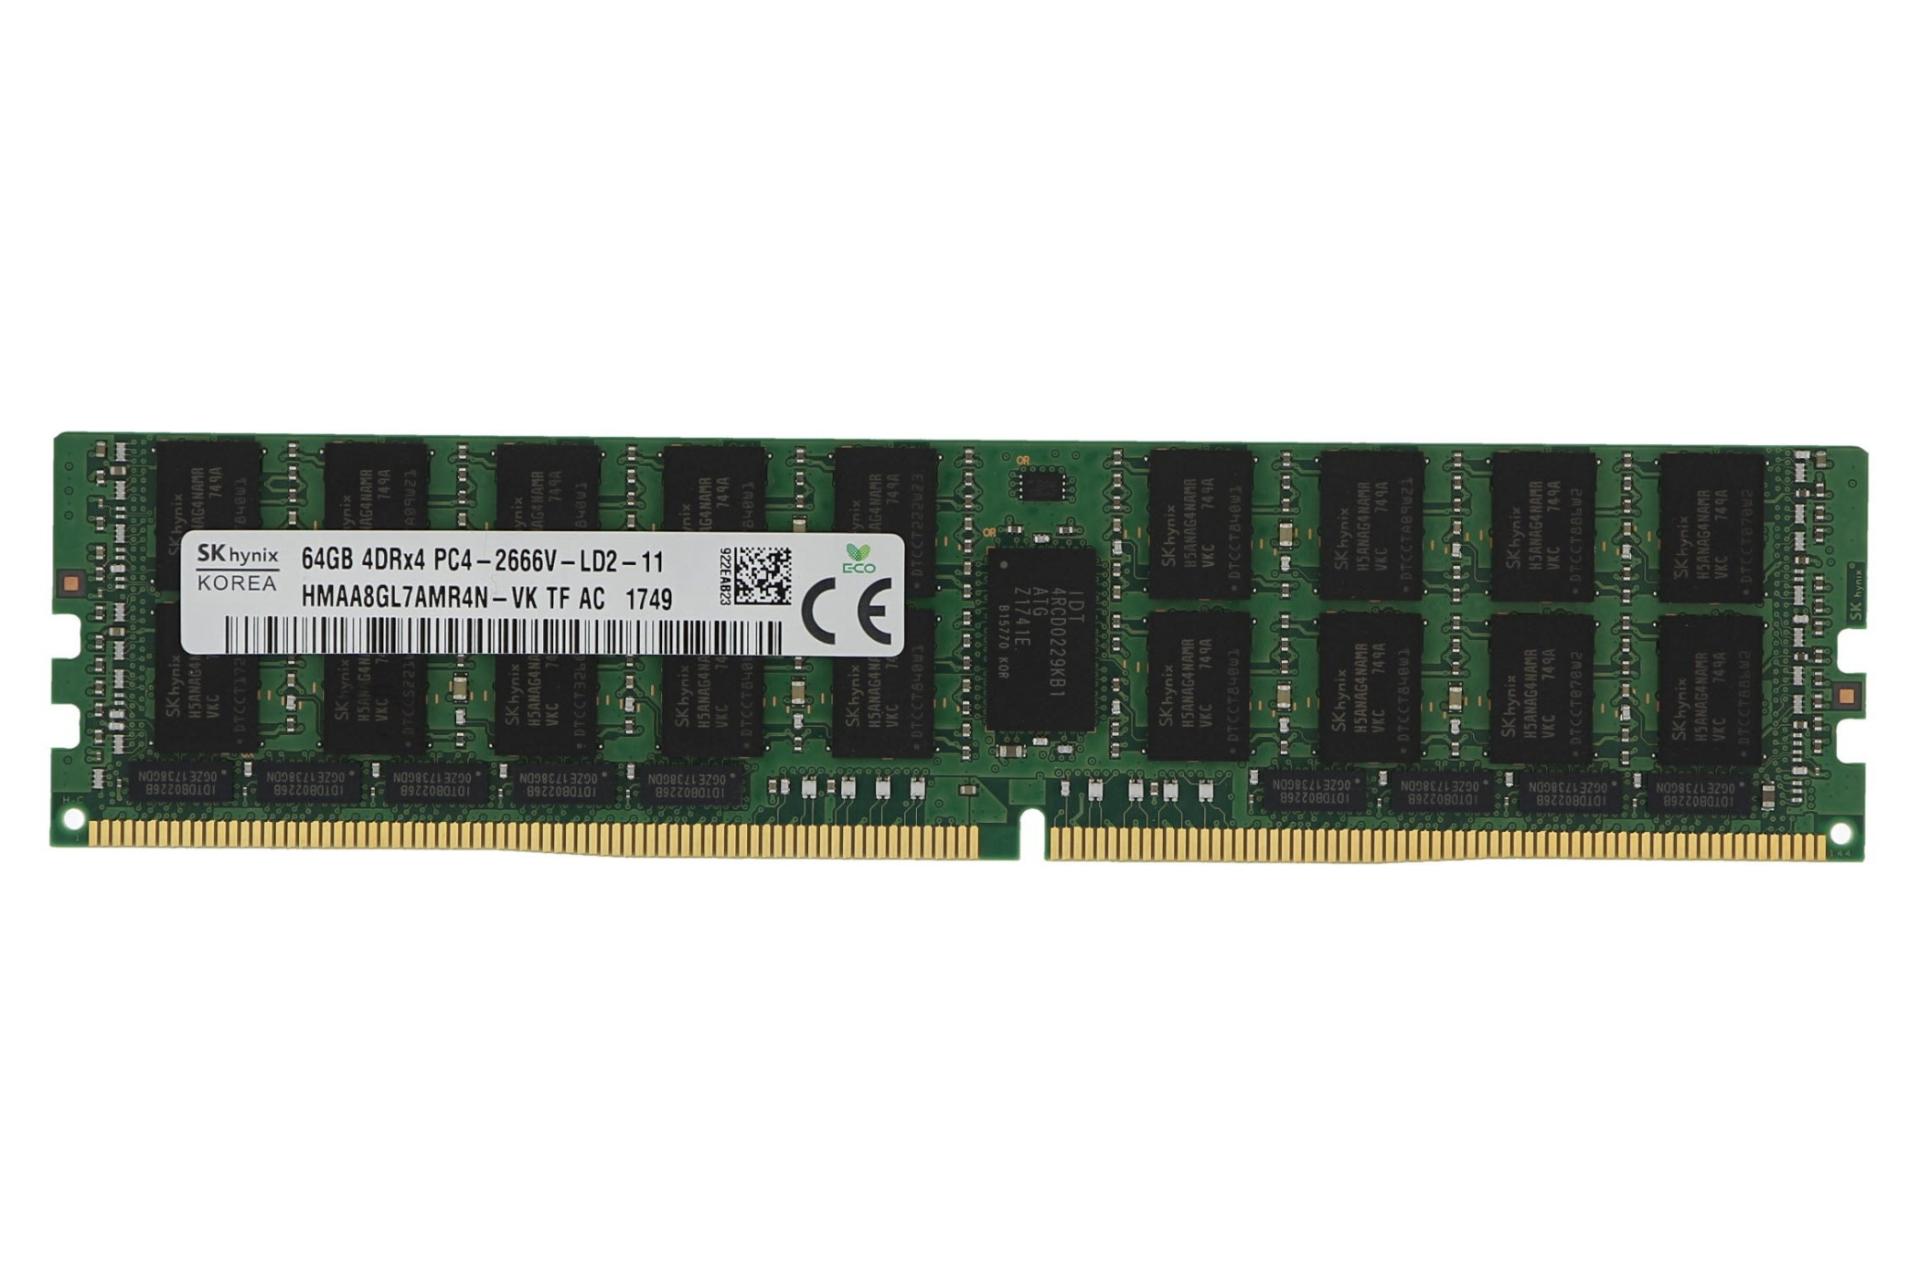 رم اس کی هاینیکس HMAA8GL7AMR4N-VK ظرفیت 64 گیگابایت از نوع DDR4-2666